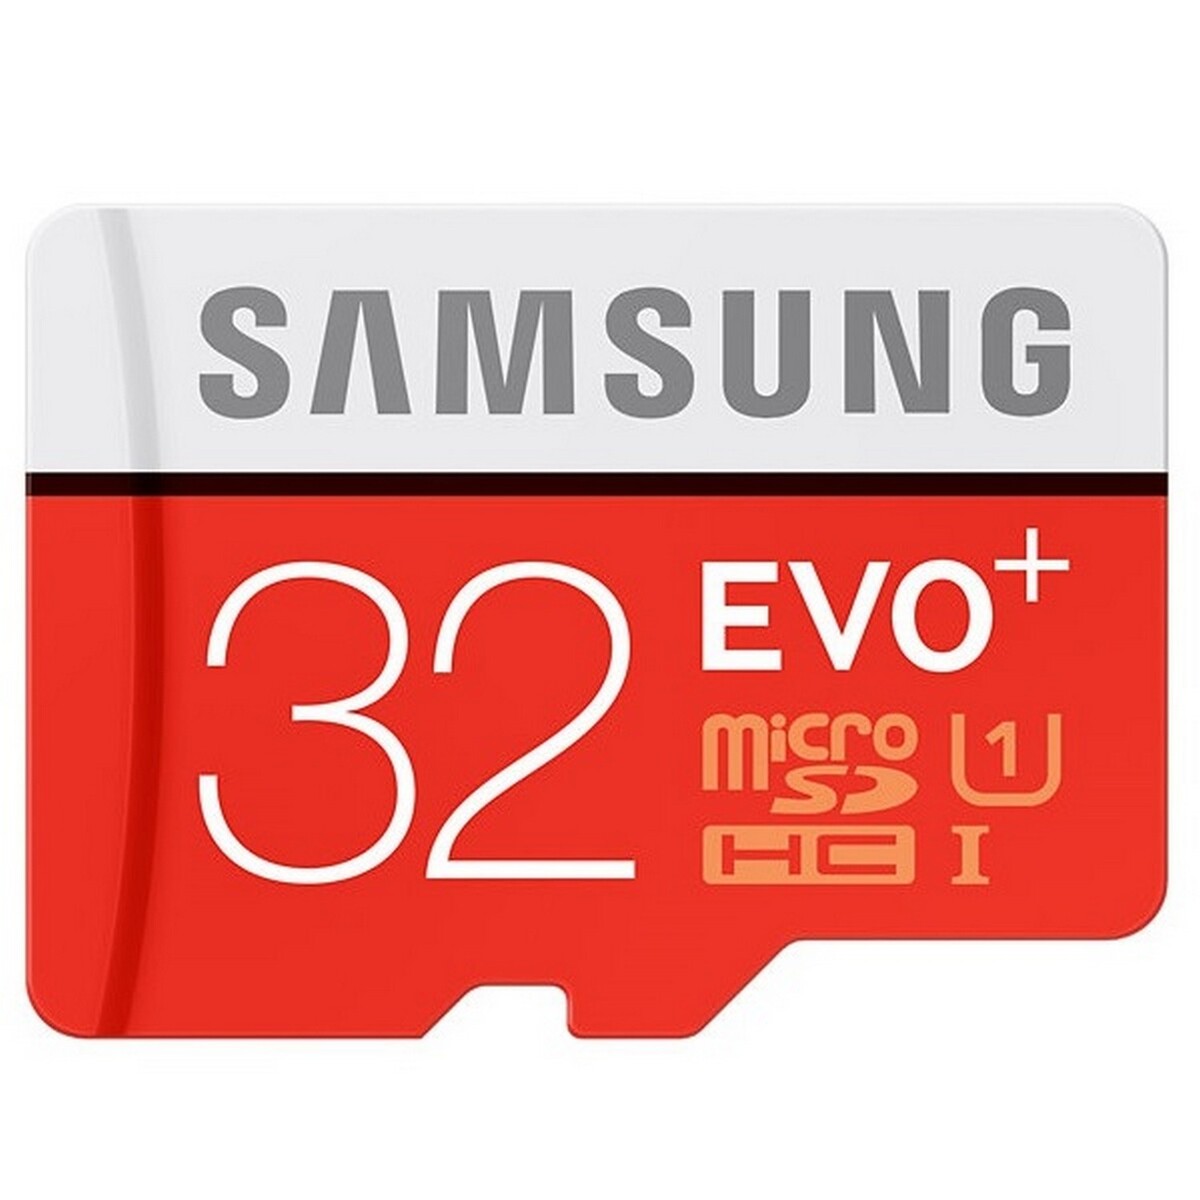 Samsung Micro SD Card Evo Plus 32GB